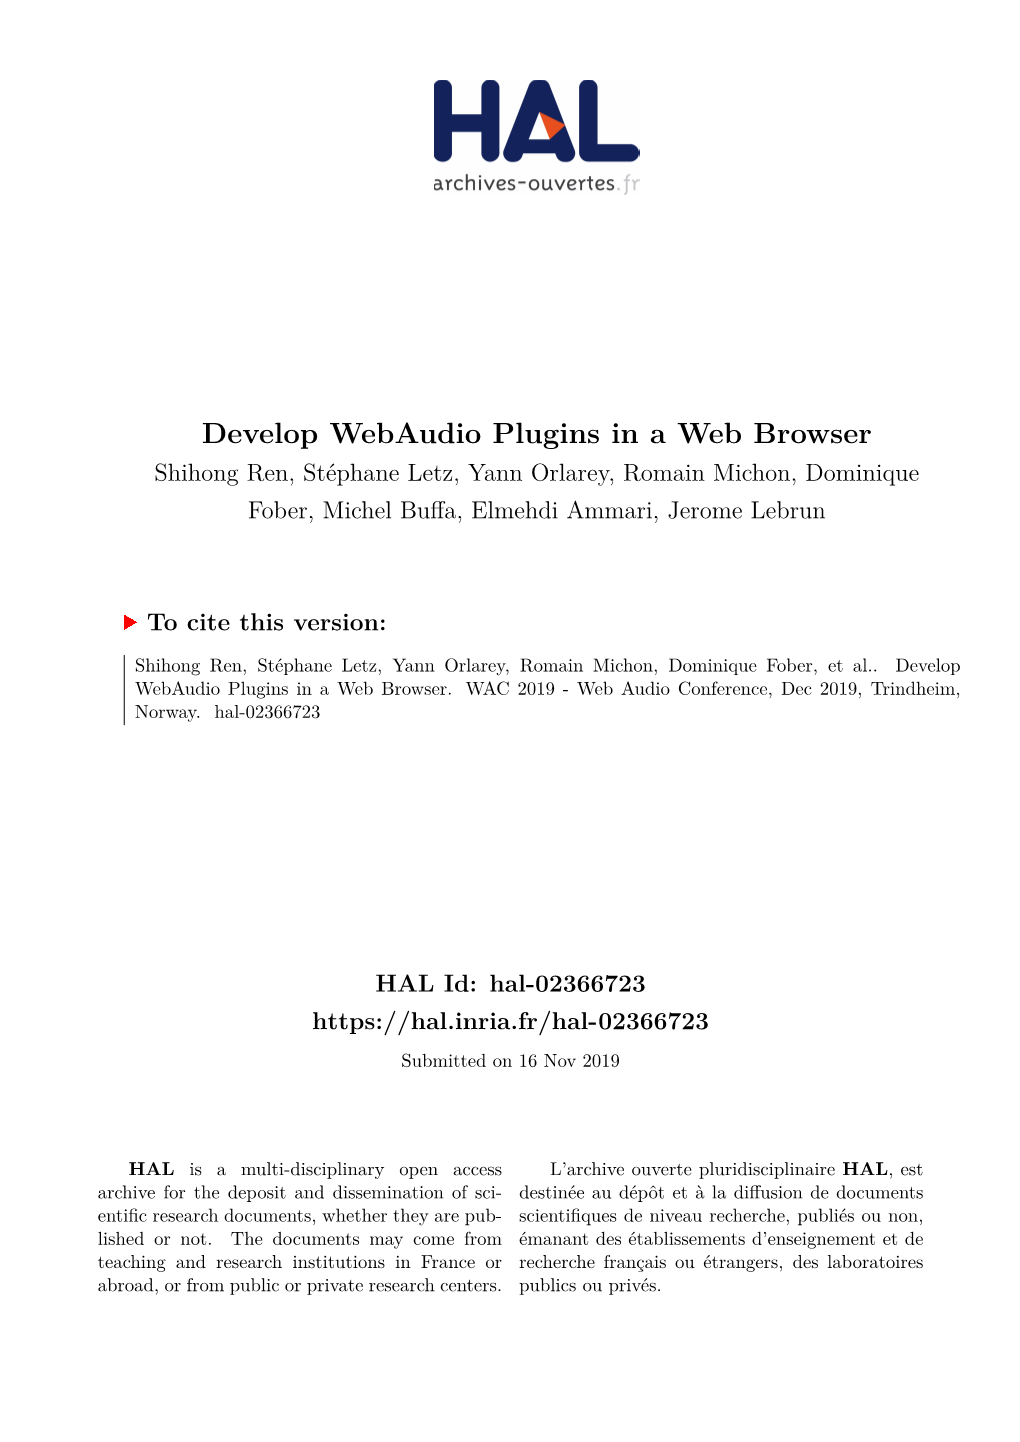 Develop Webaudio Plugins in a Web Browser Shihong Ren, Stéphane Letz, Yann Orlarey, Romain Michon, Dominique Fober, Michel Buffa, Elmehdi Ammari, Jerome Lebrun